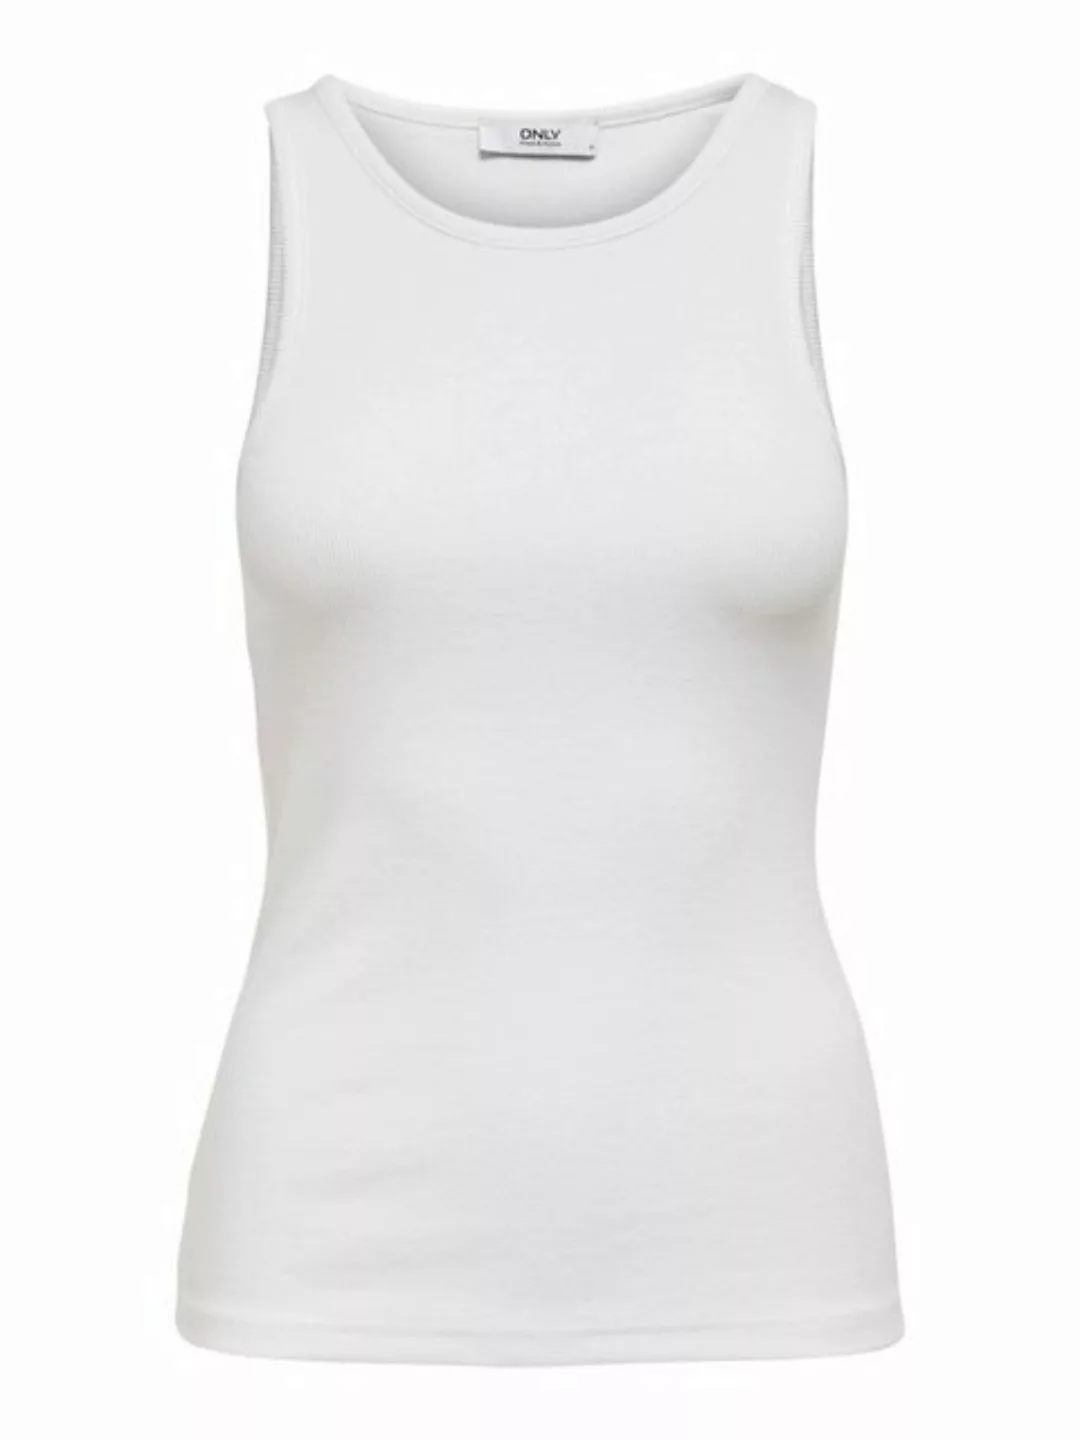 Only Kenya Life Rib Ärmelloses T-shirt XL White günstig online kaufen